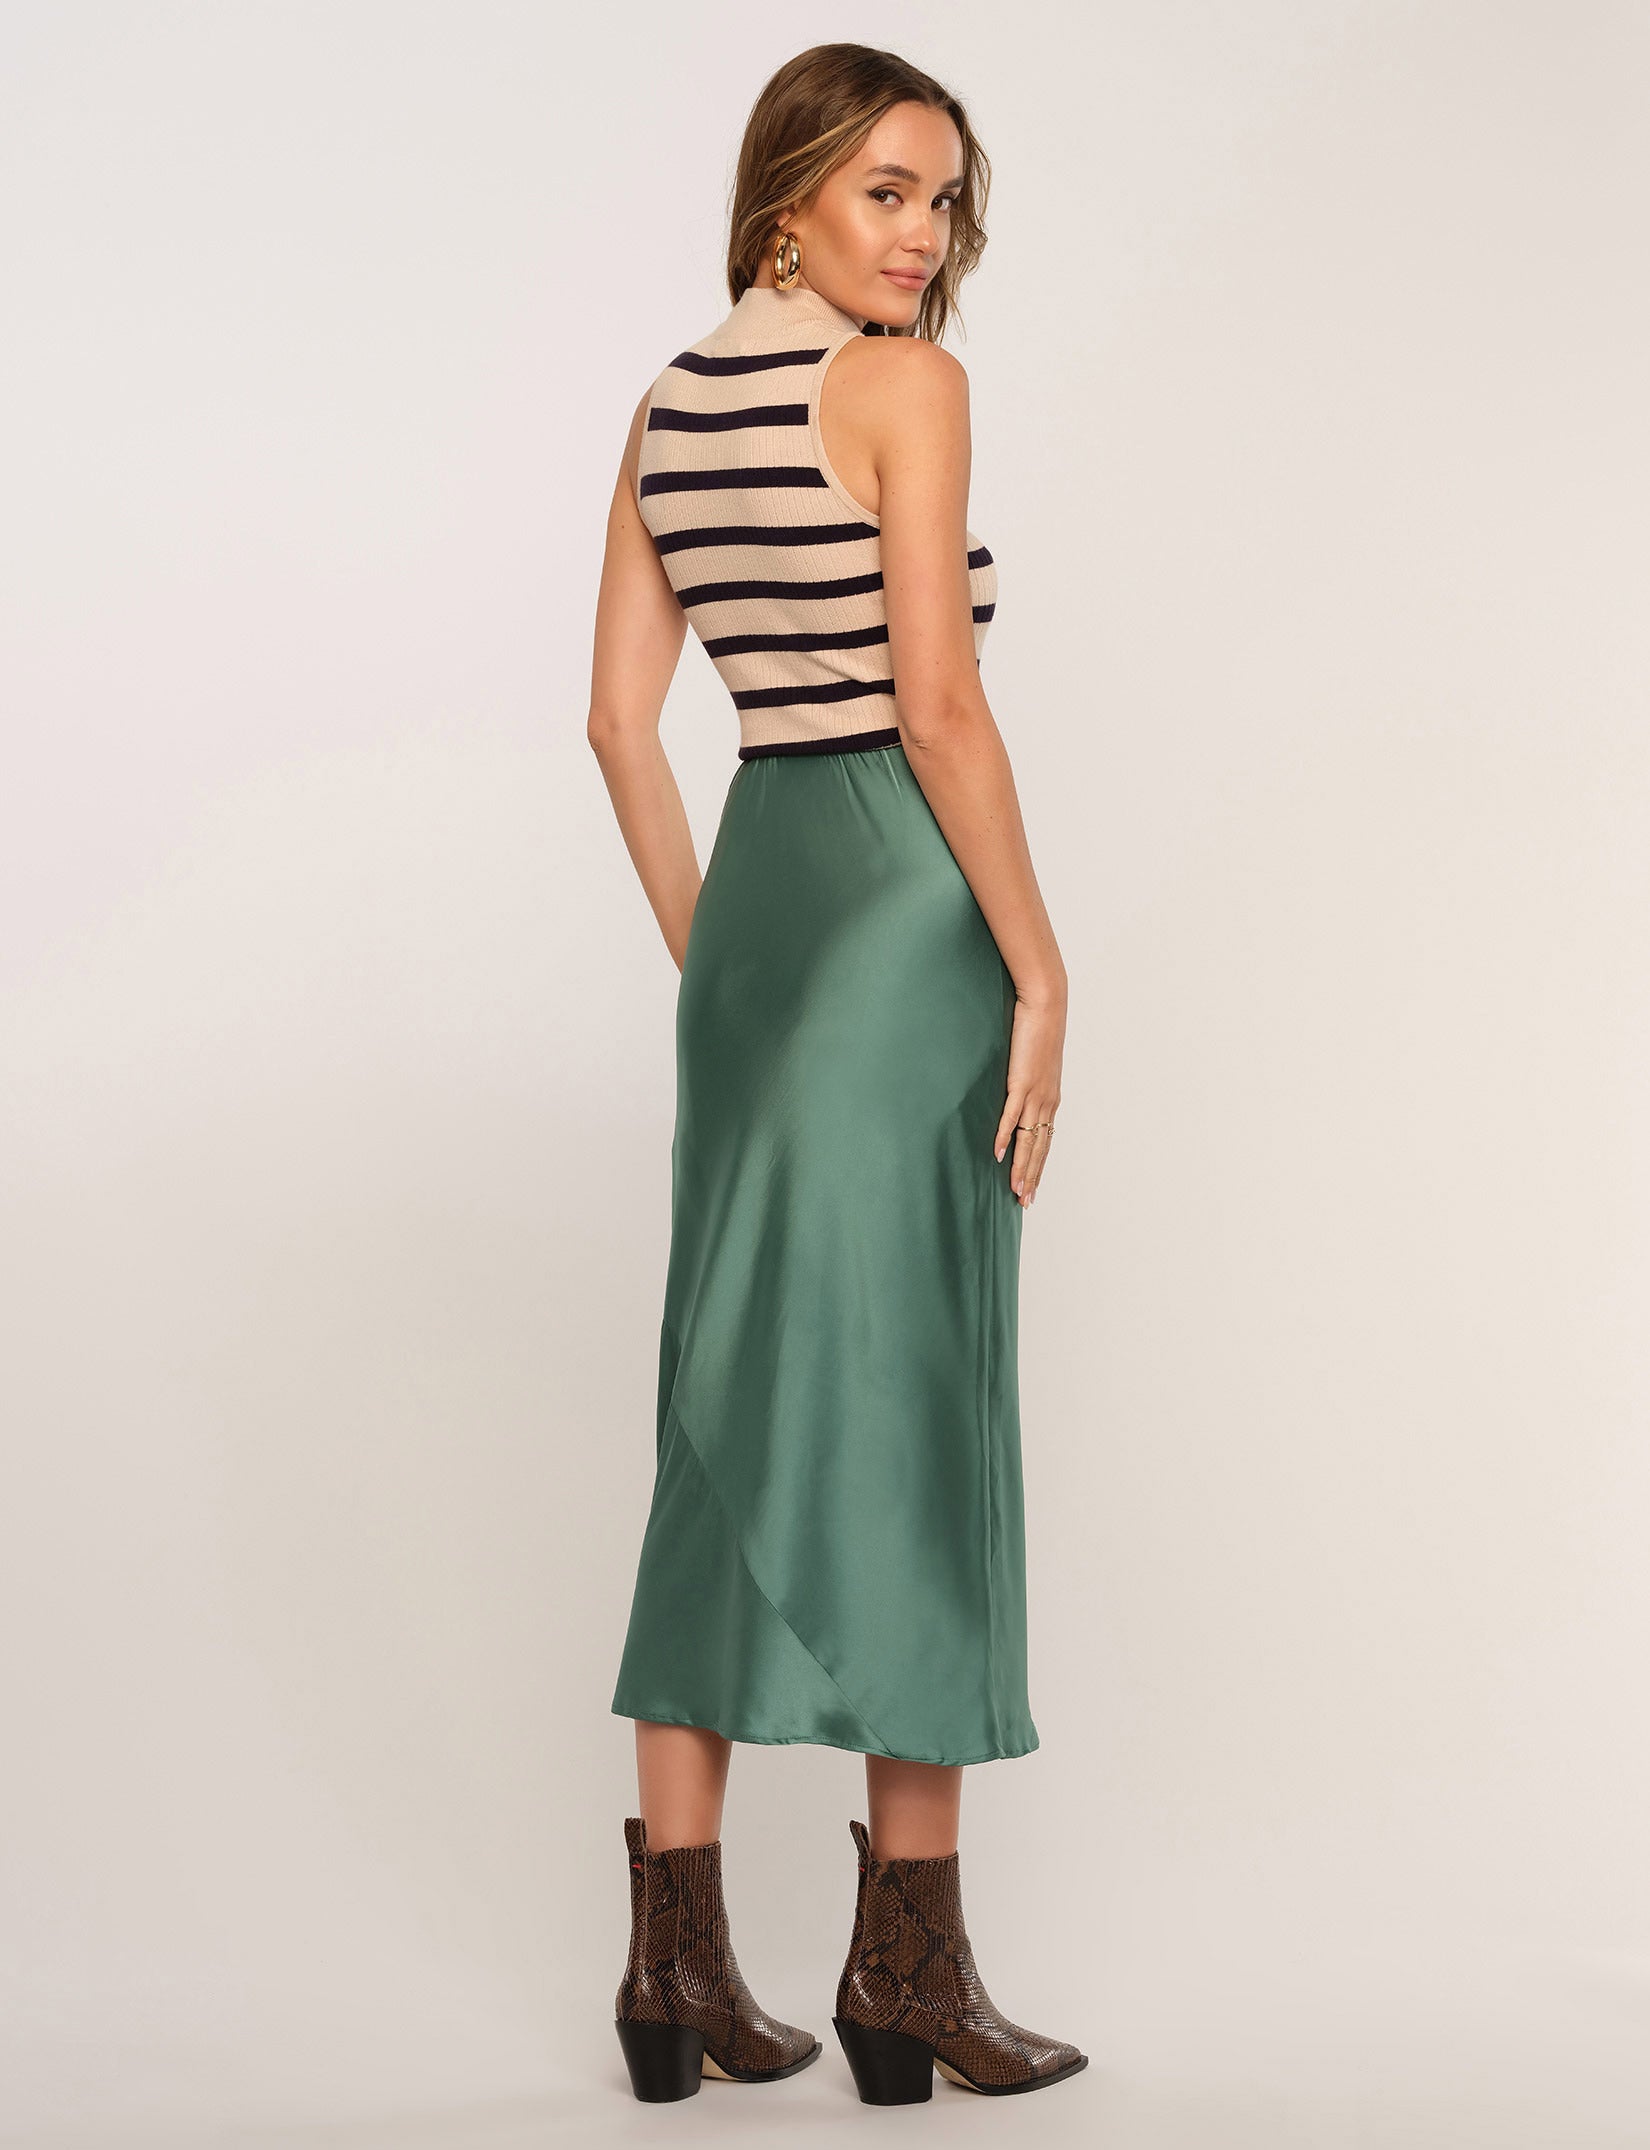 Heartloom, Sheridan Bias Cut Midi Skirt in Grass - Boutique Dandelion